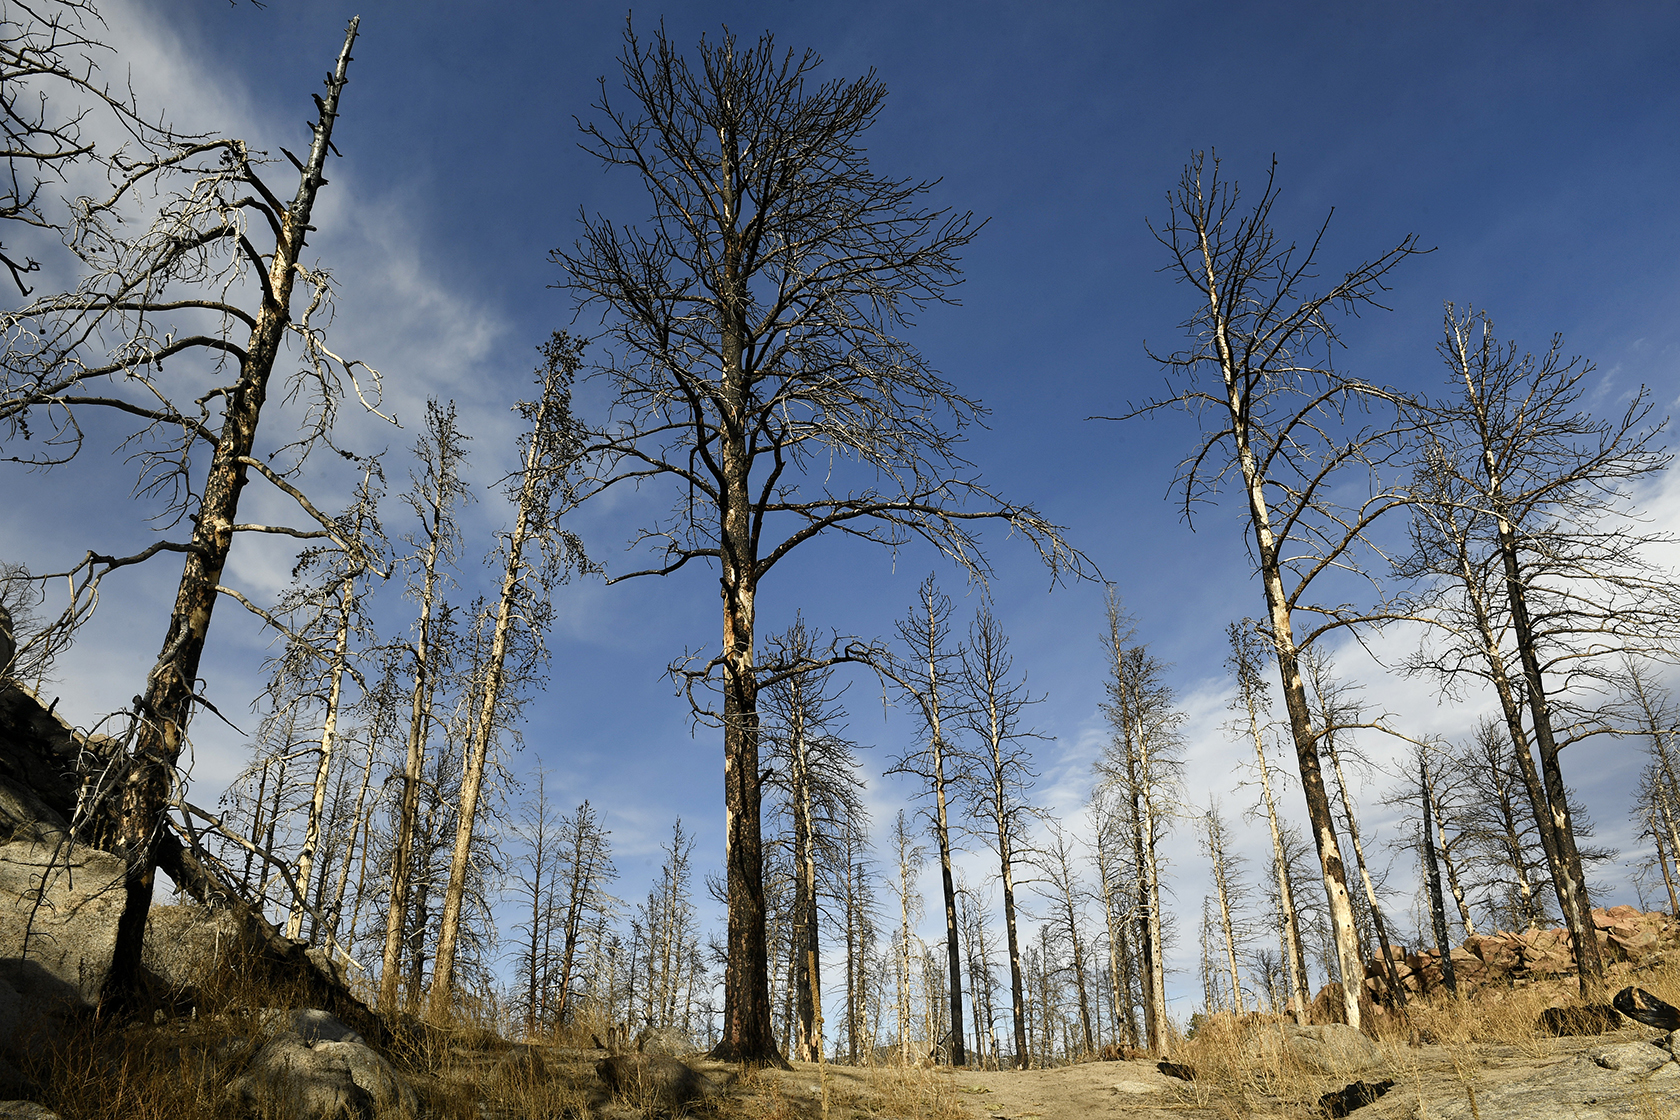 Burned trees against a blue sky